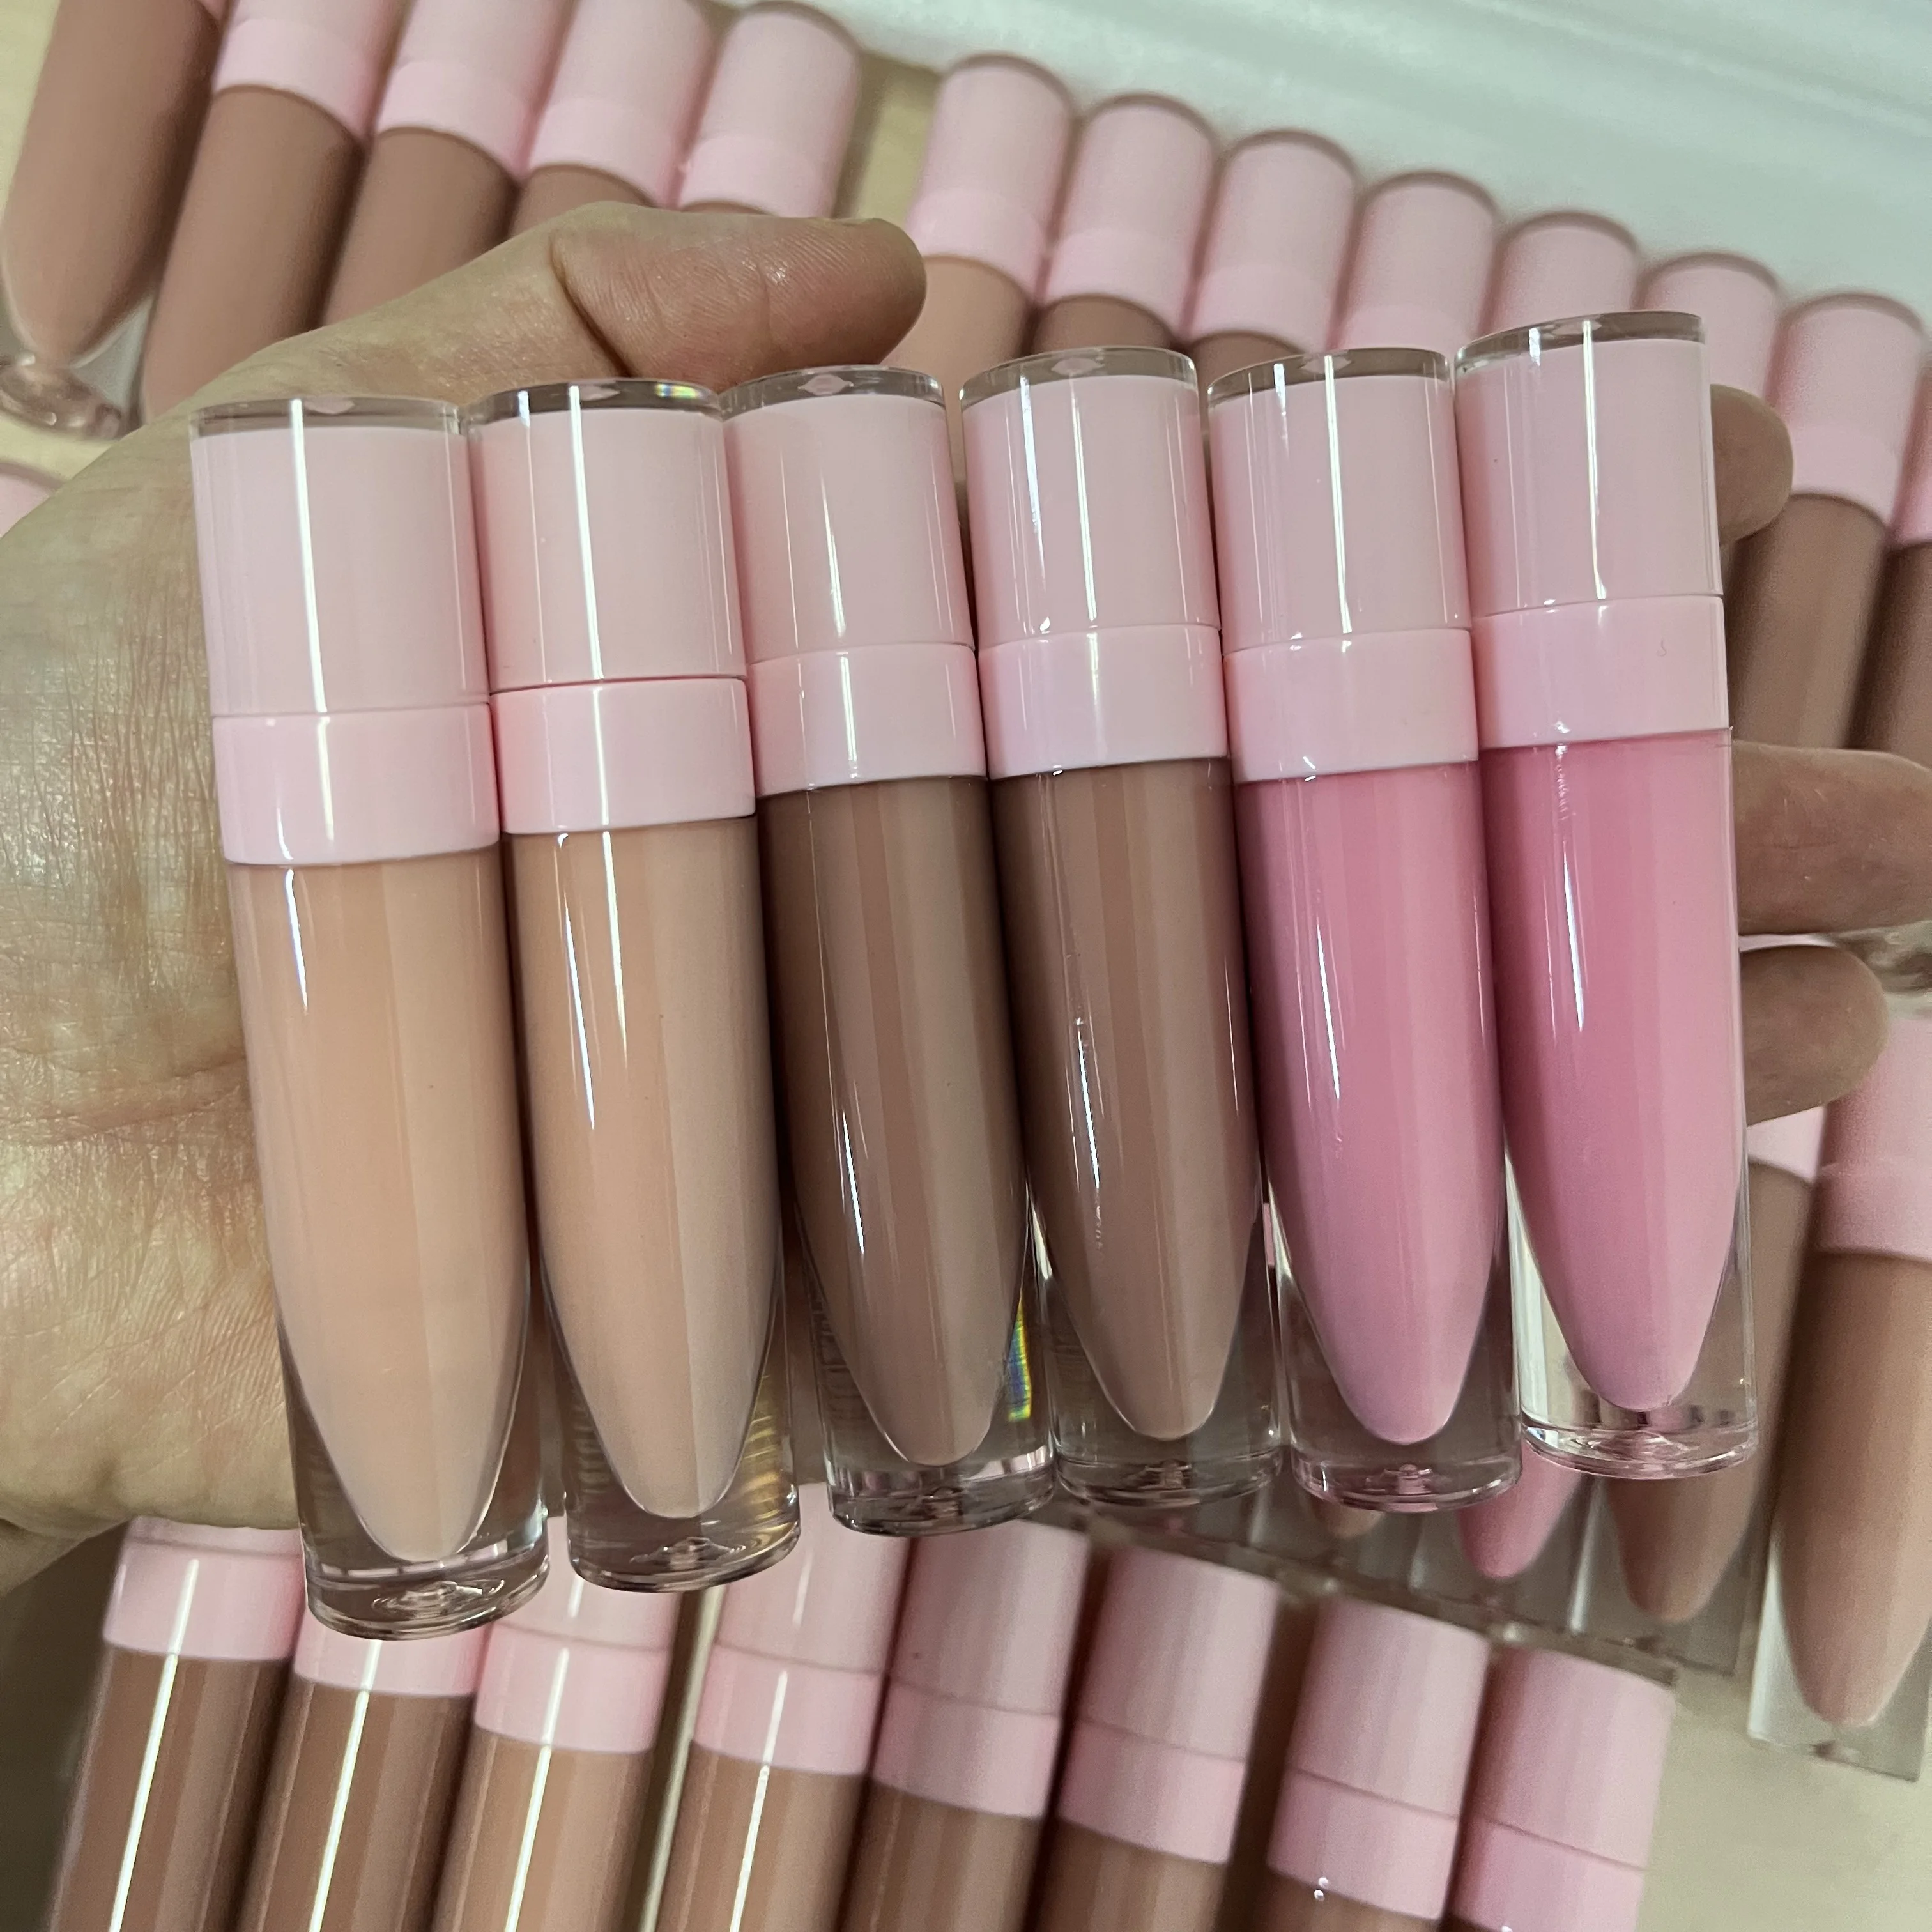 

Lip gloss vendor wholesale pink lip gloss containers vegan makeup private label lip plumper gloss